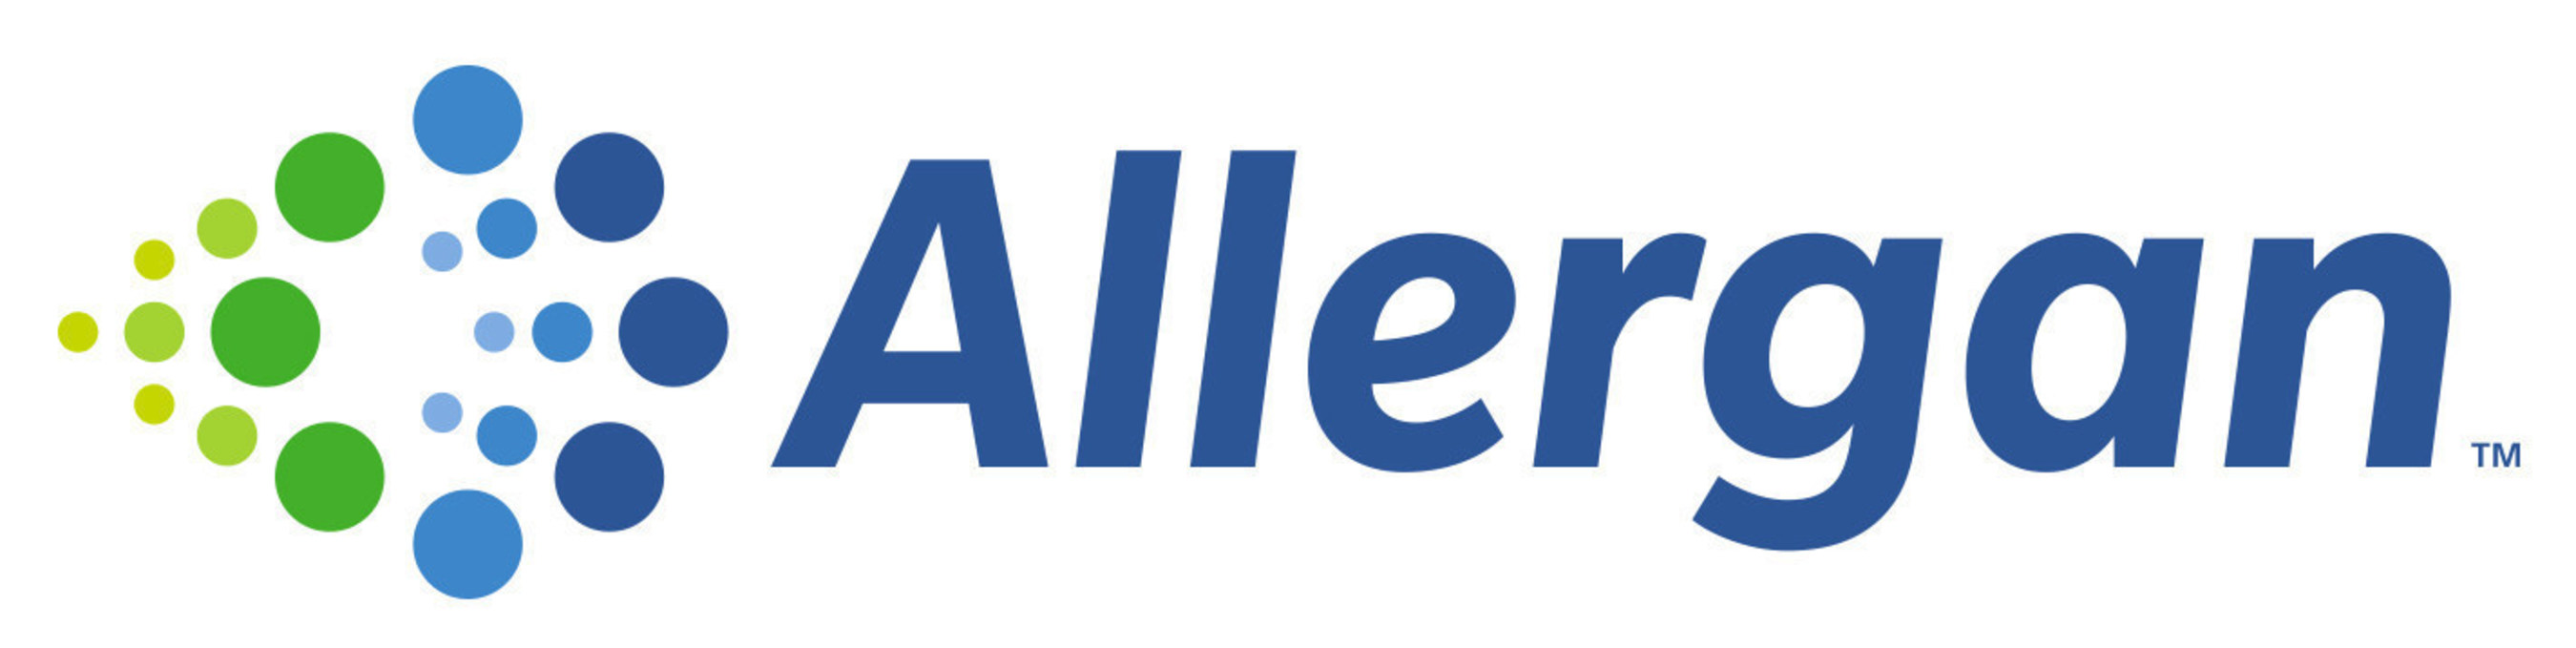 Allergan plc logo (PRNewsFoto/)